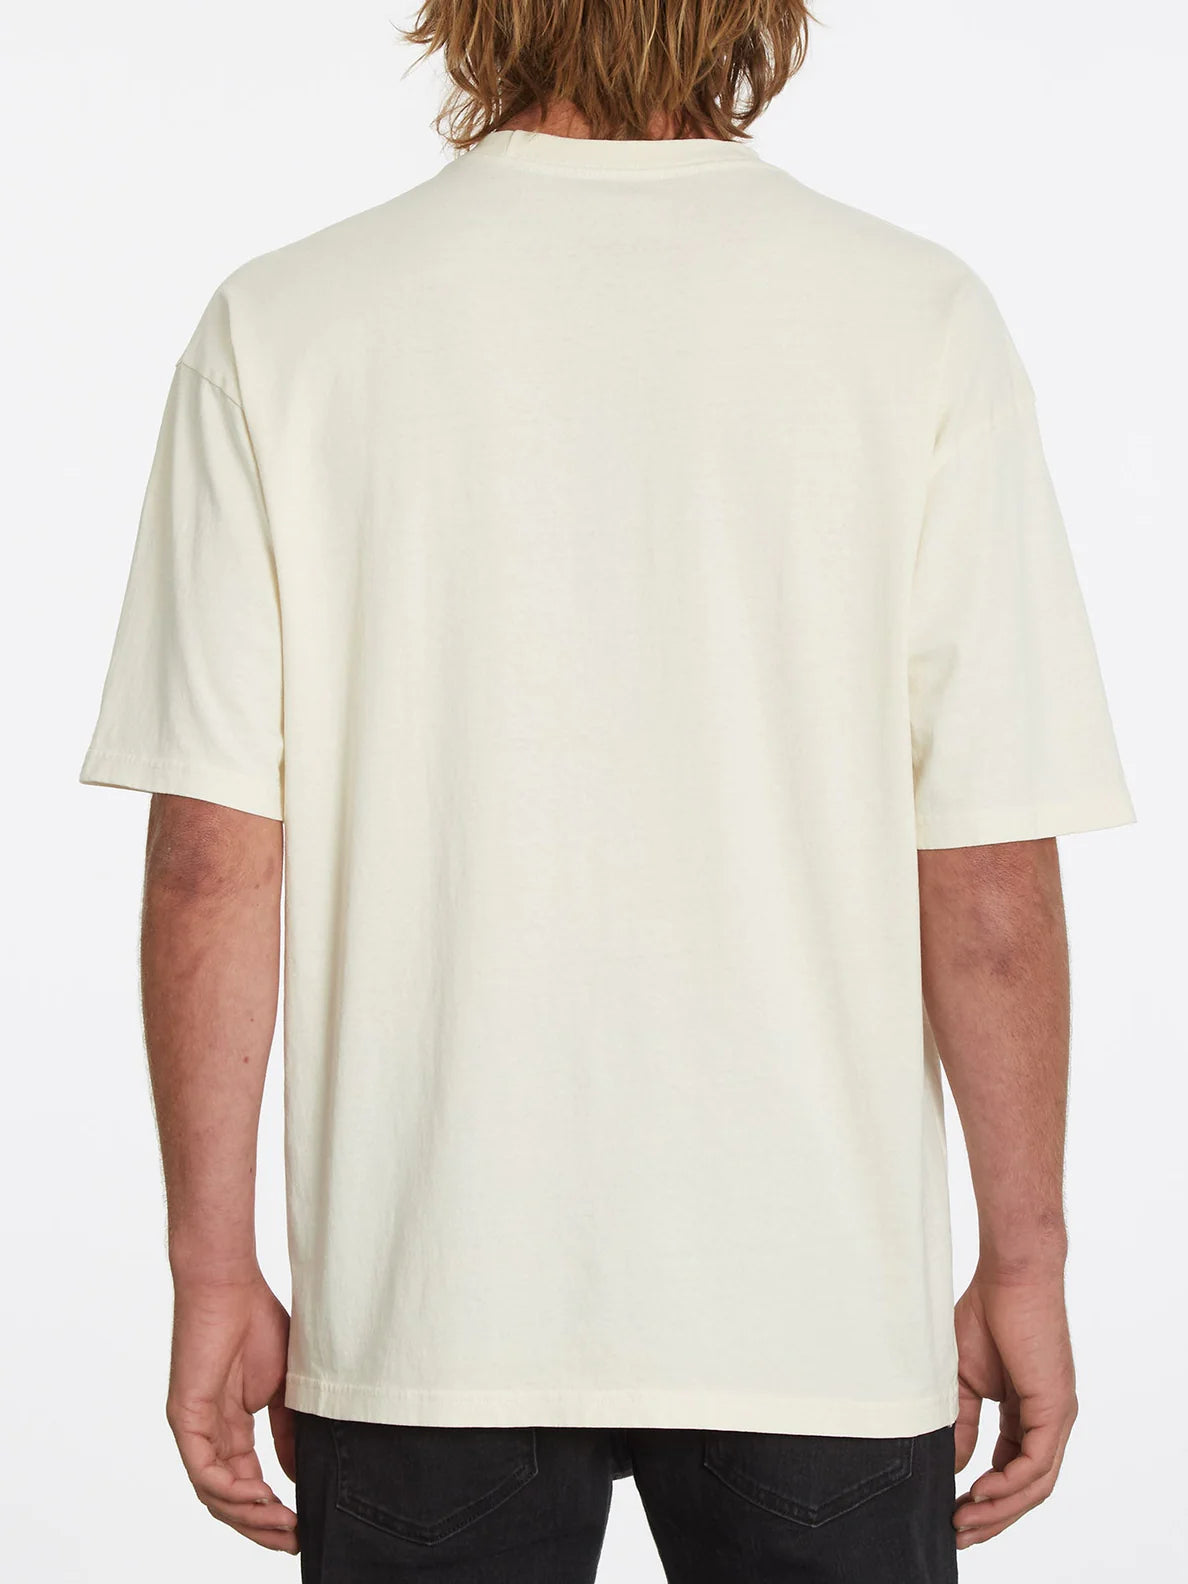 Camiseta Volcom Binik SST Whitecap Grey